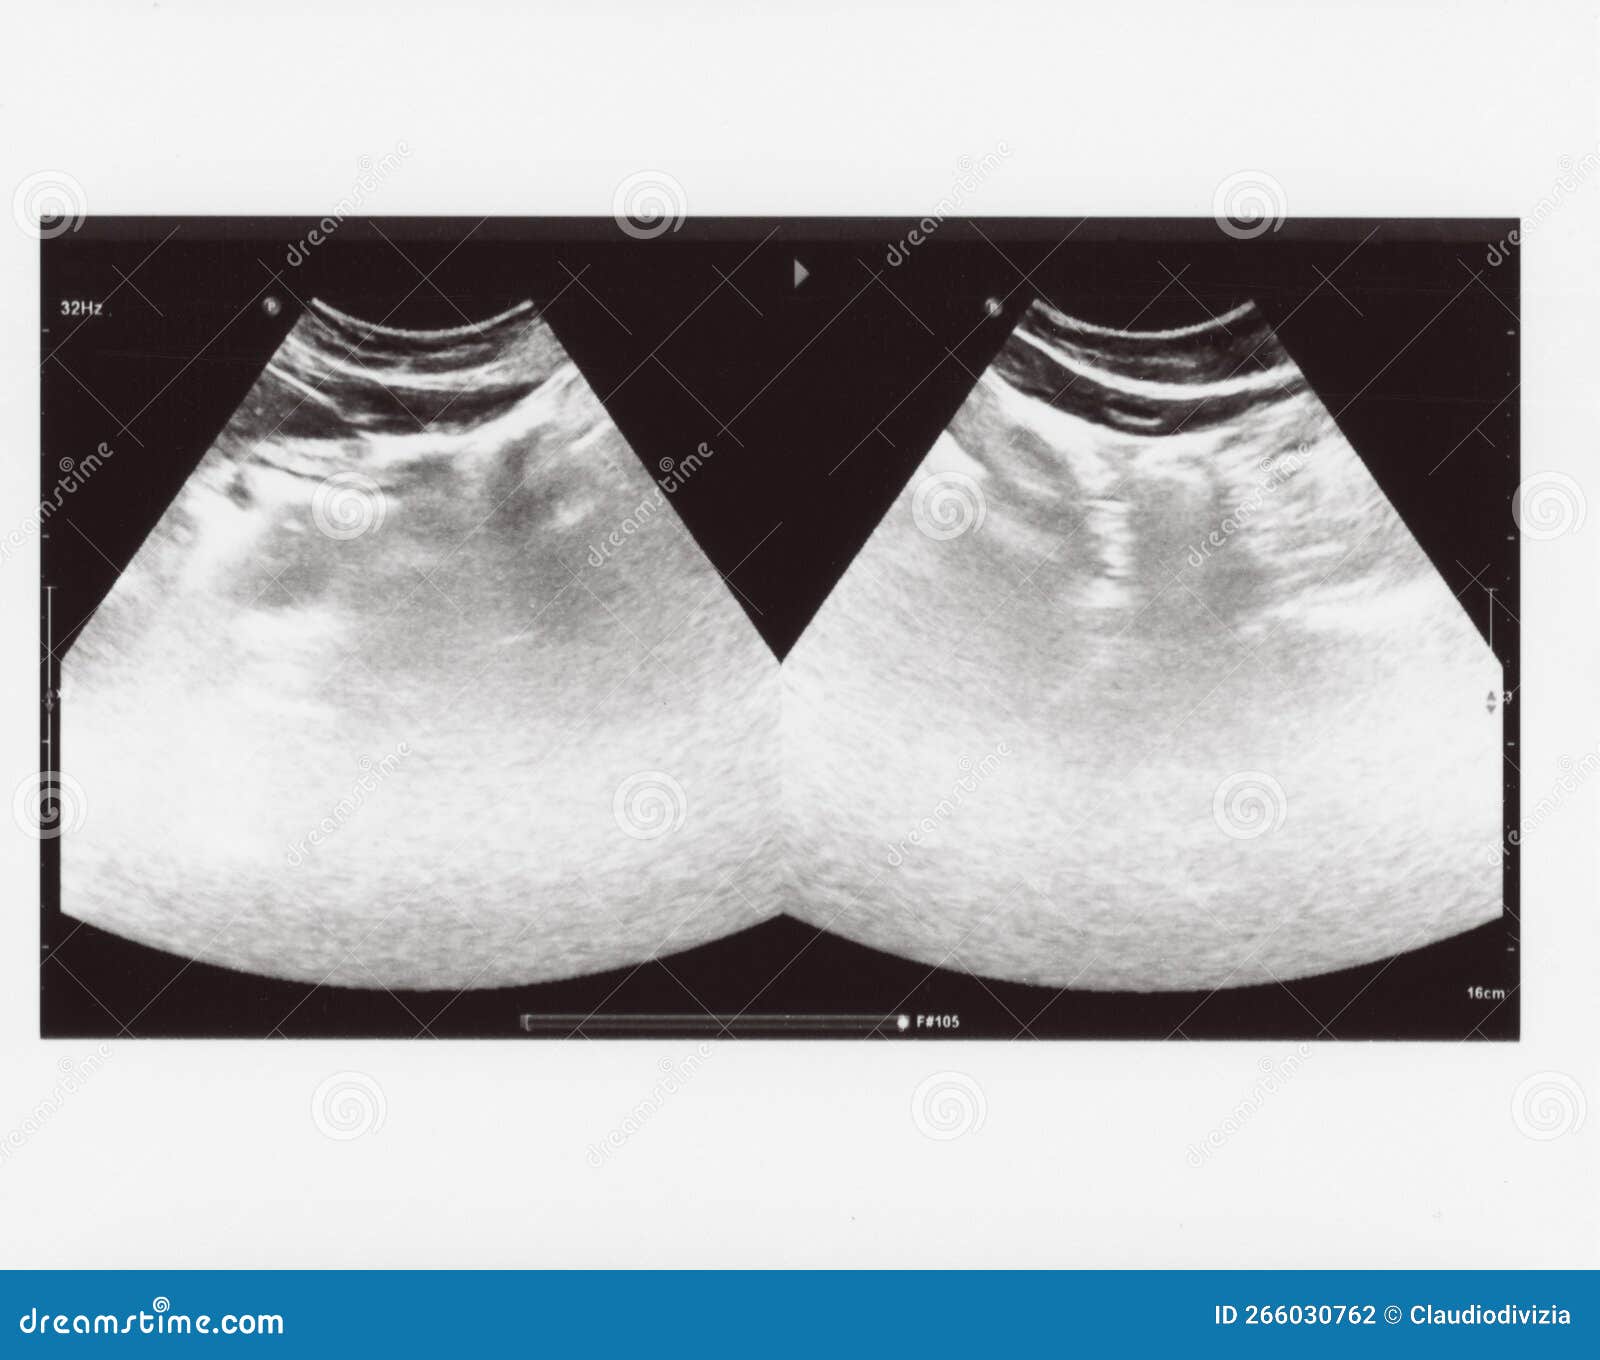 full abdomen ultrasound sonogram